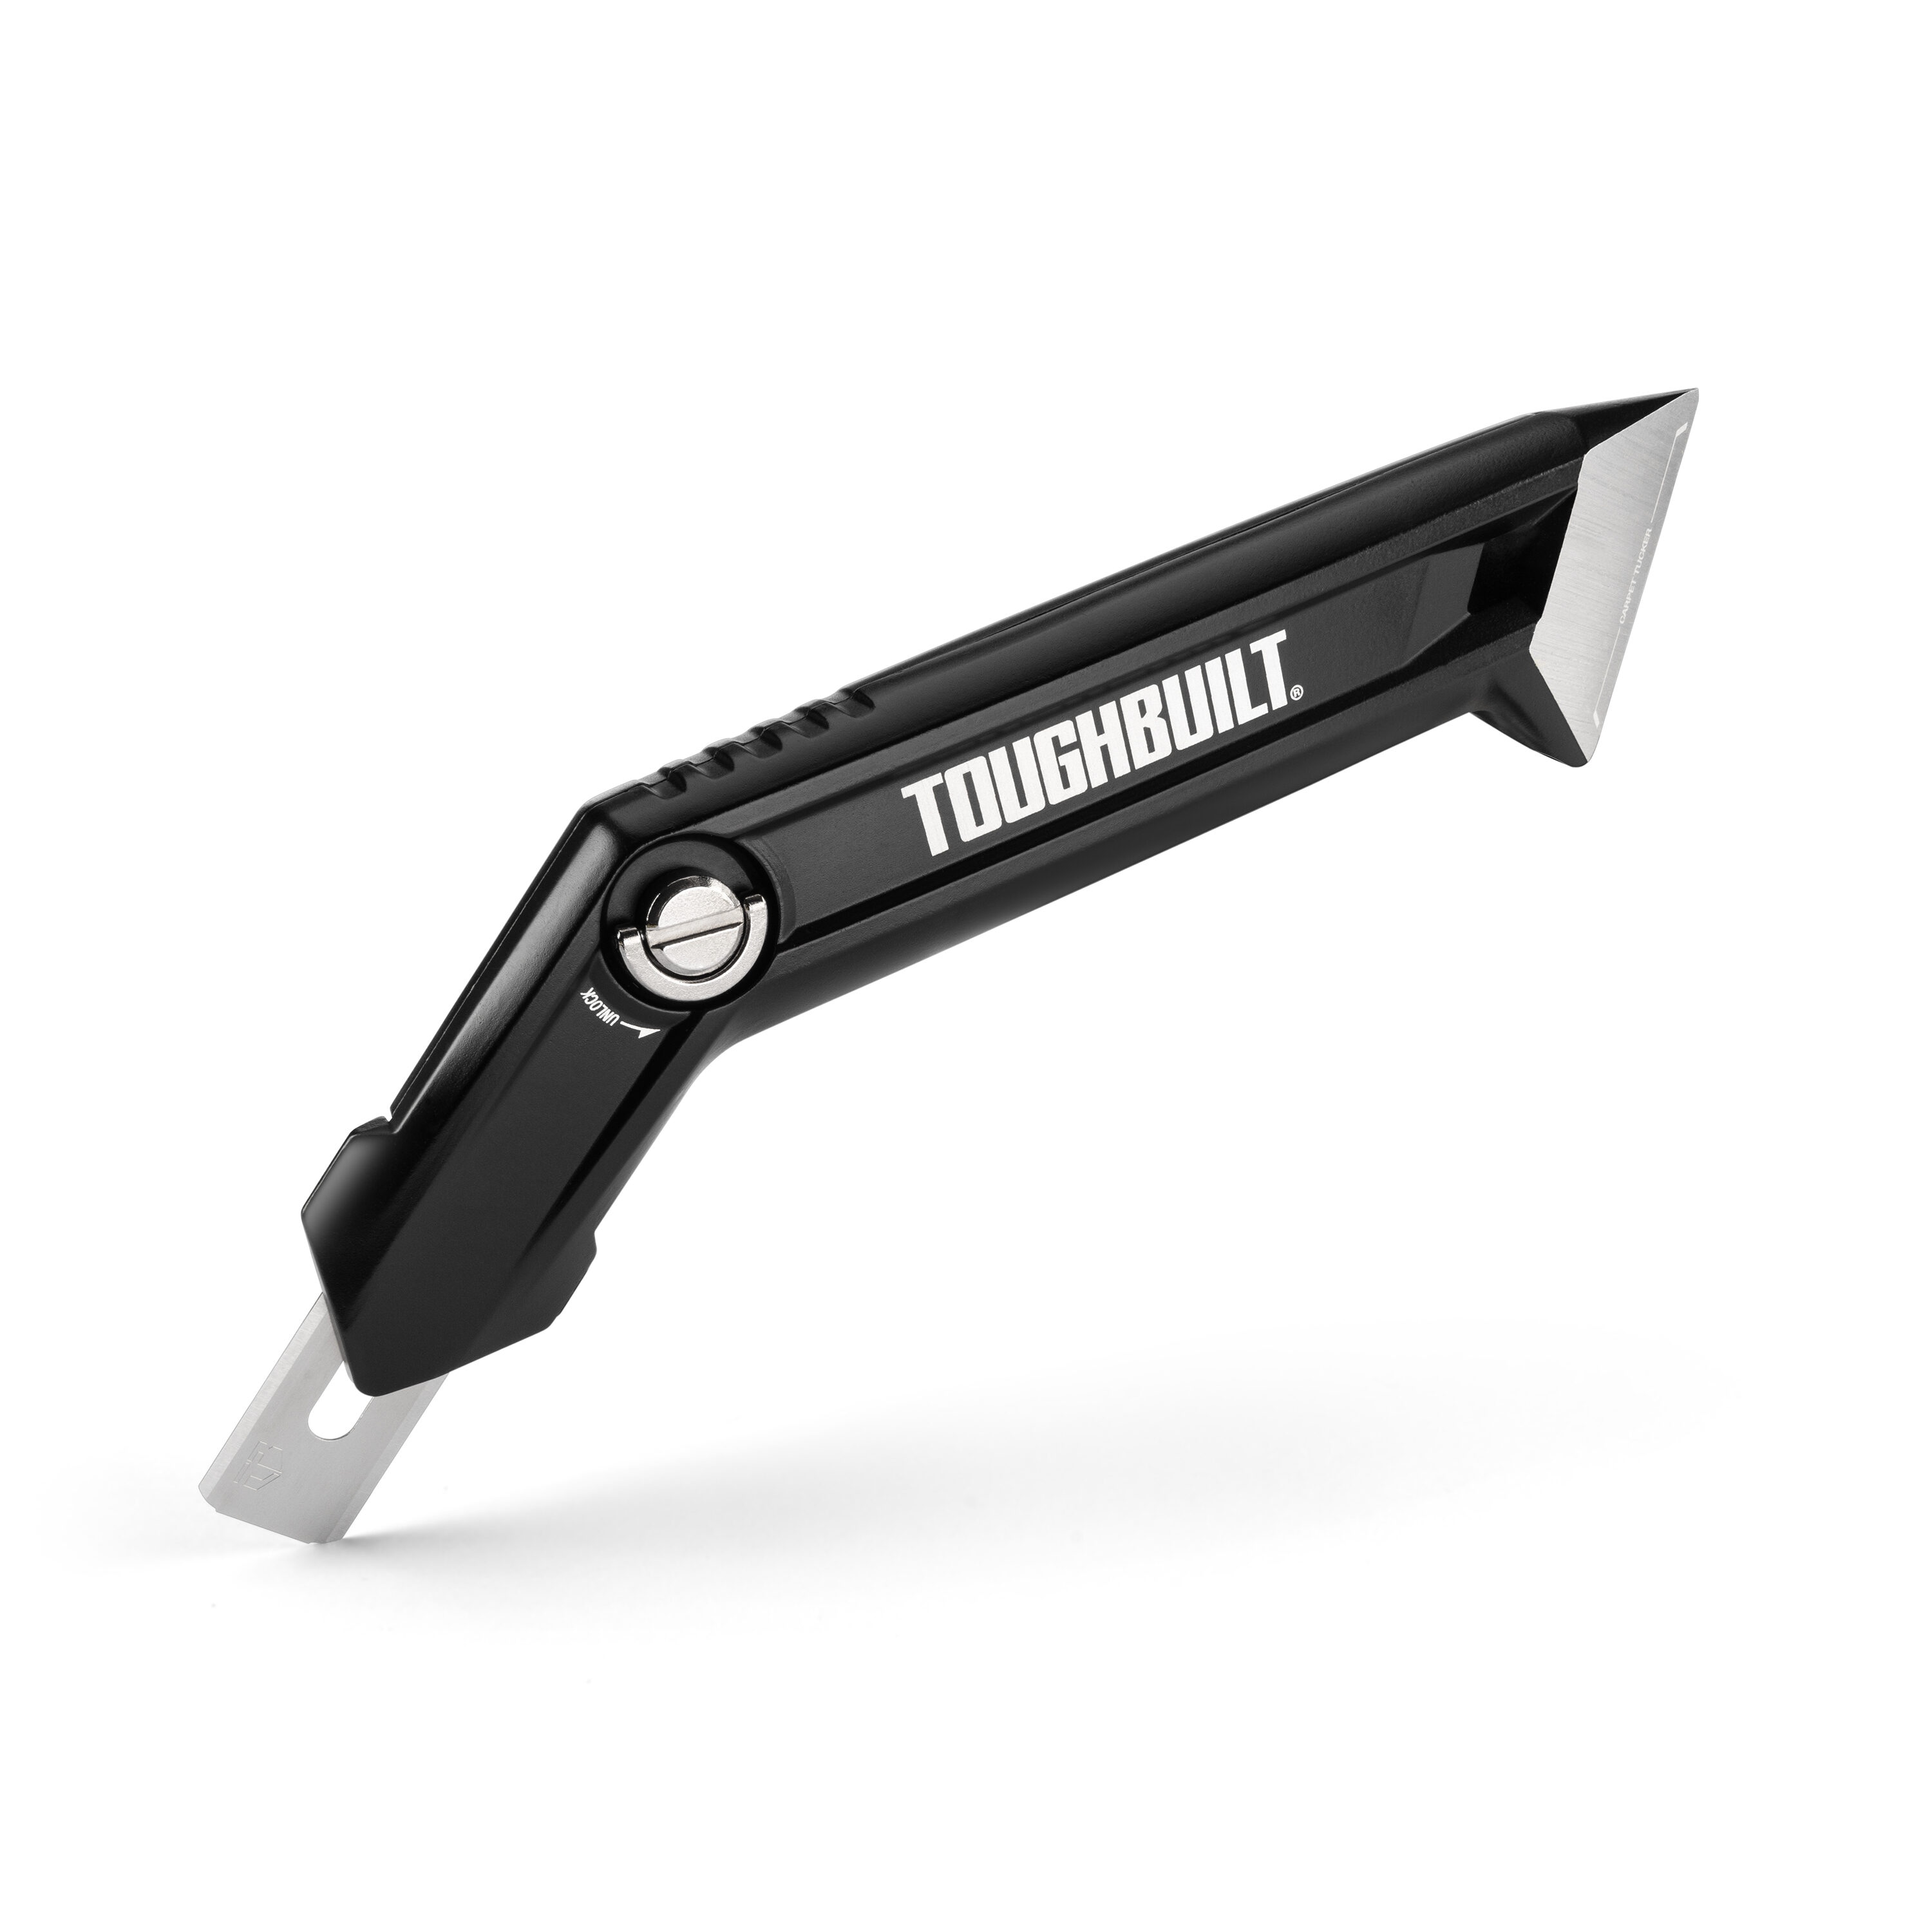 Toughbuilt Scraper:Utility Knife 